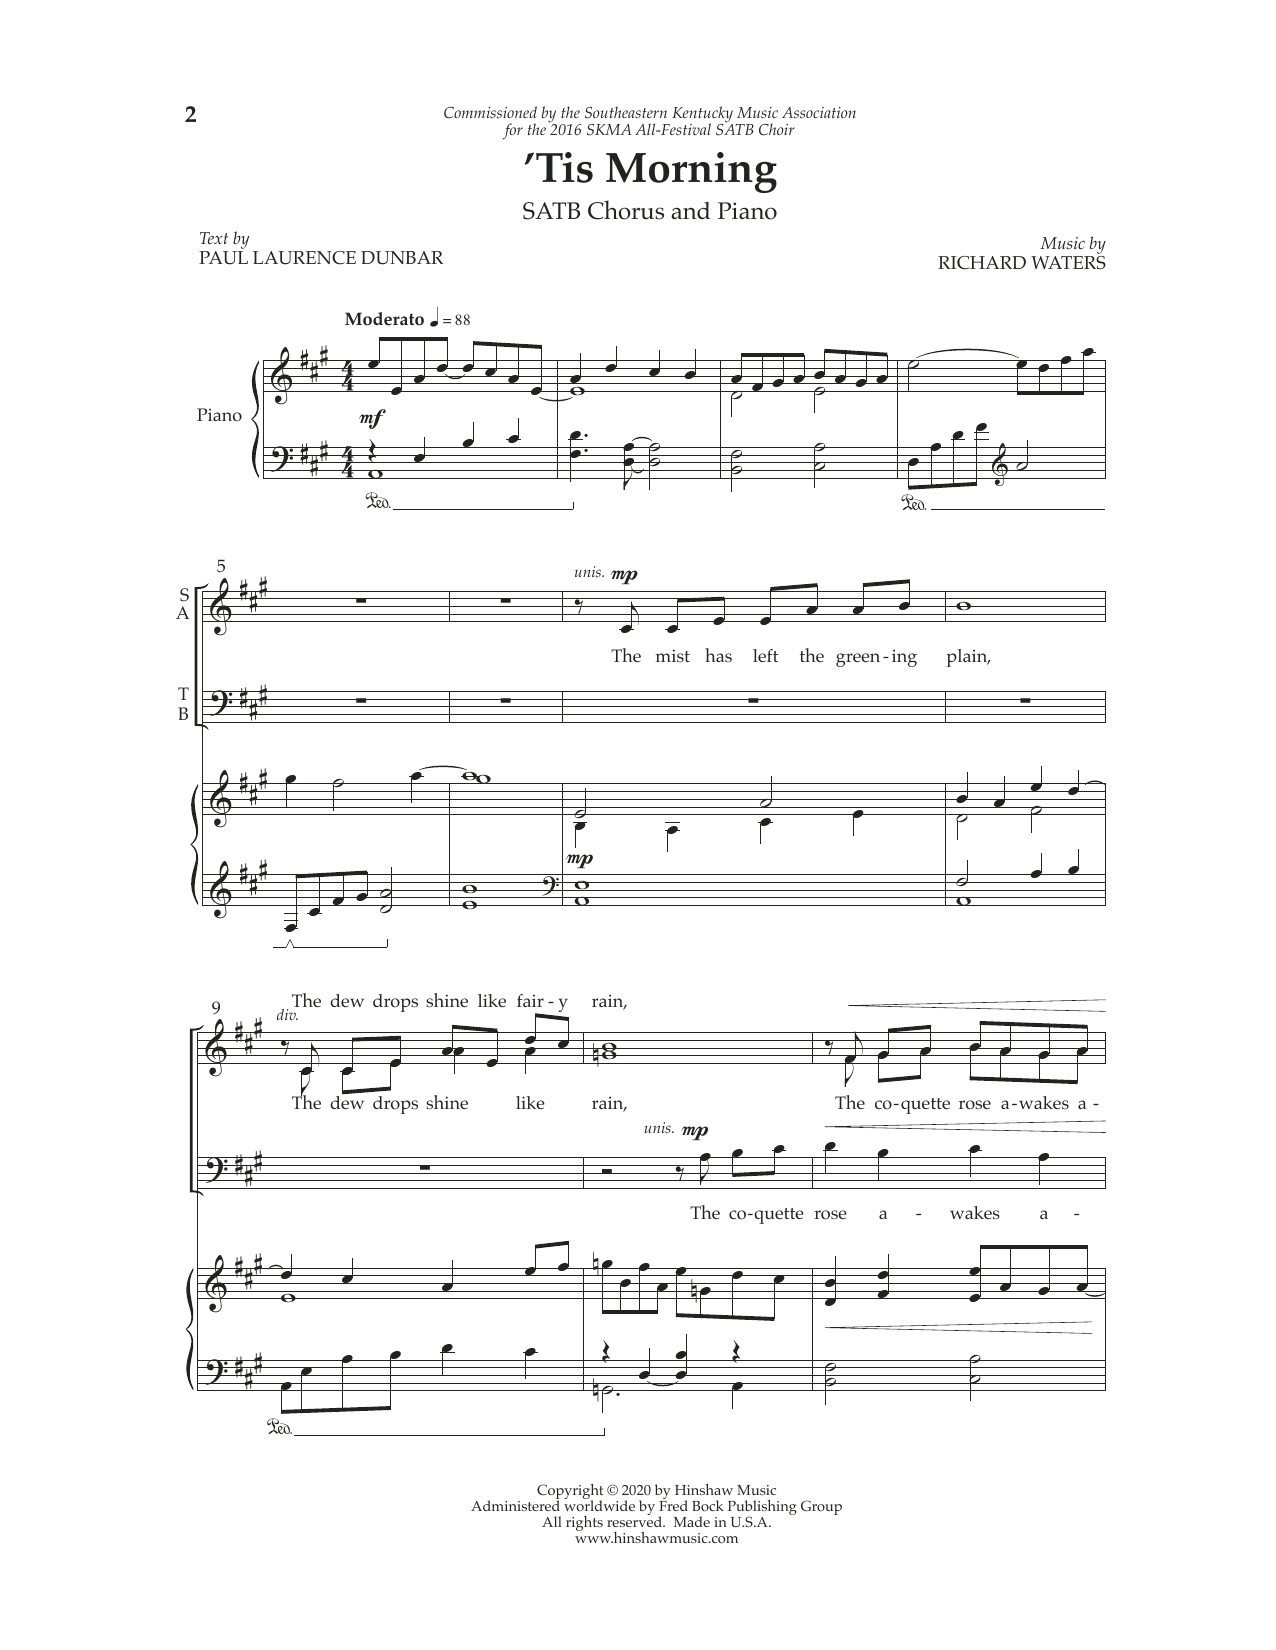 Richard Waters 'Tis Morning Sheet Music Notes & Chords for SATB Choir - Download or Print PDF